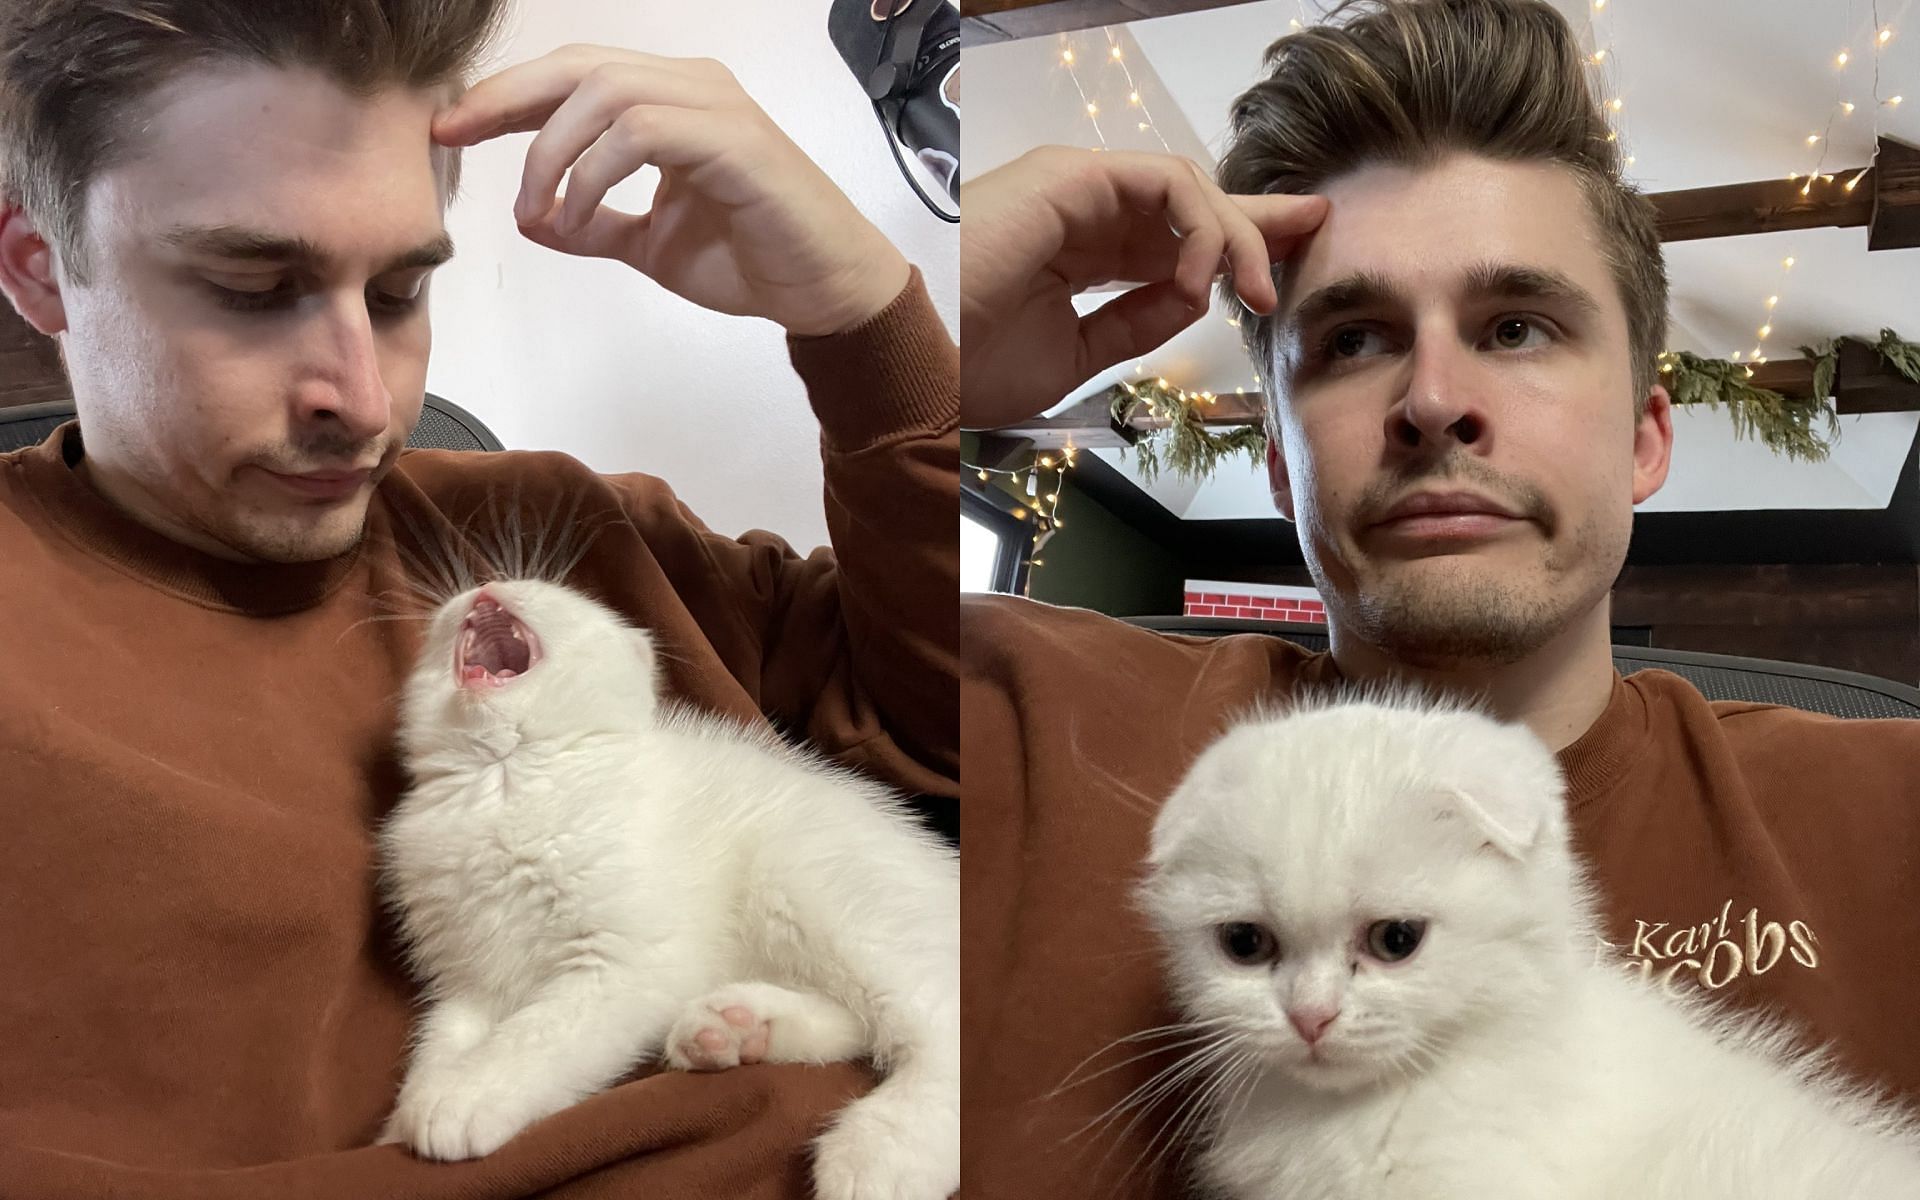 Ludwig names his new cat on stream (Image via LudwigAhgren/Twitter)